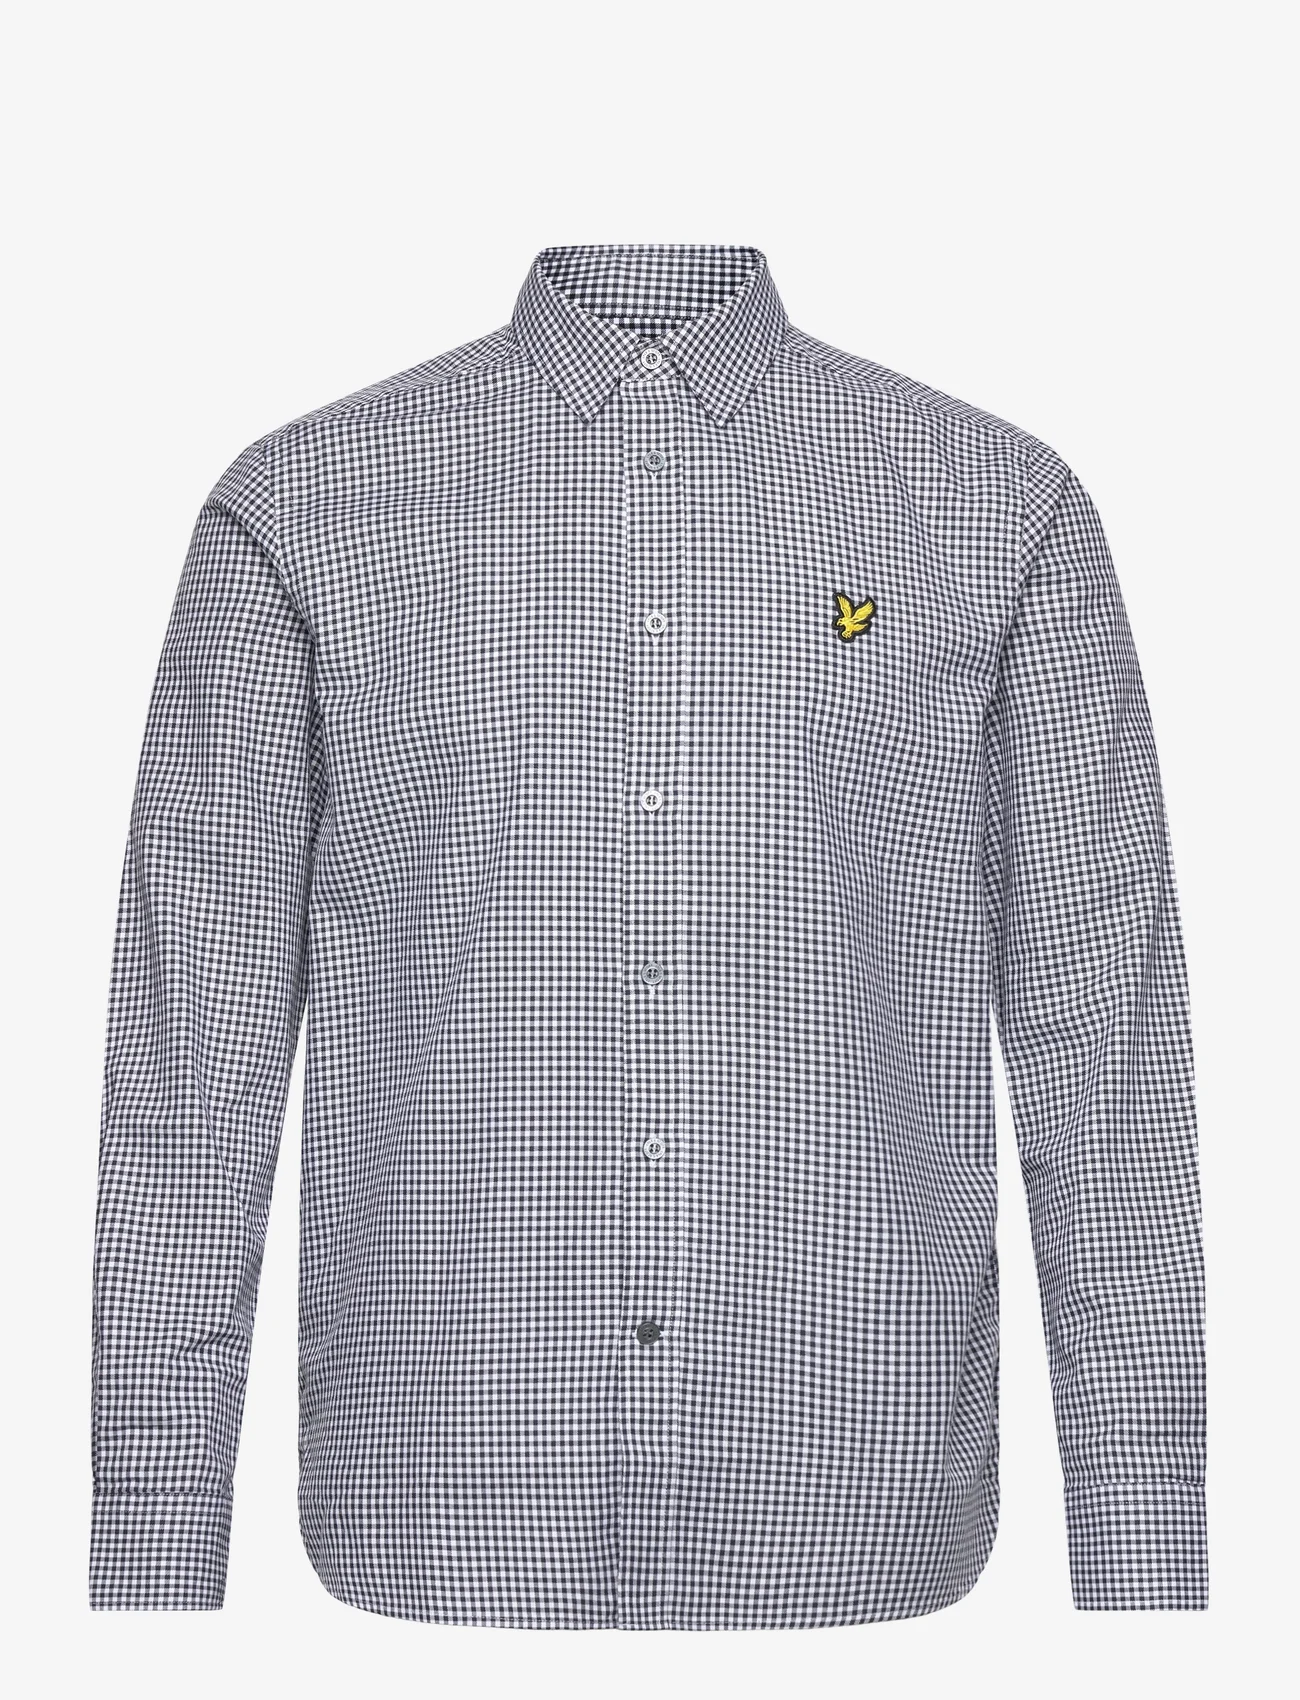 Lyle & Scott - Shepherd Check Shirt - casual skjorter - w403 dark navy/ white - 0